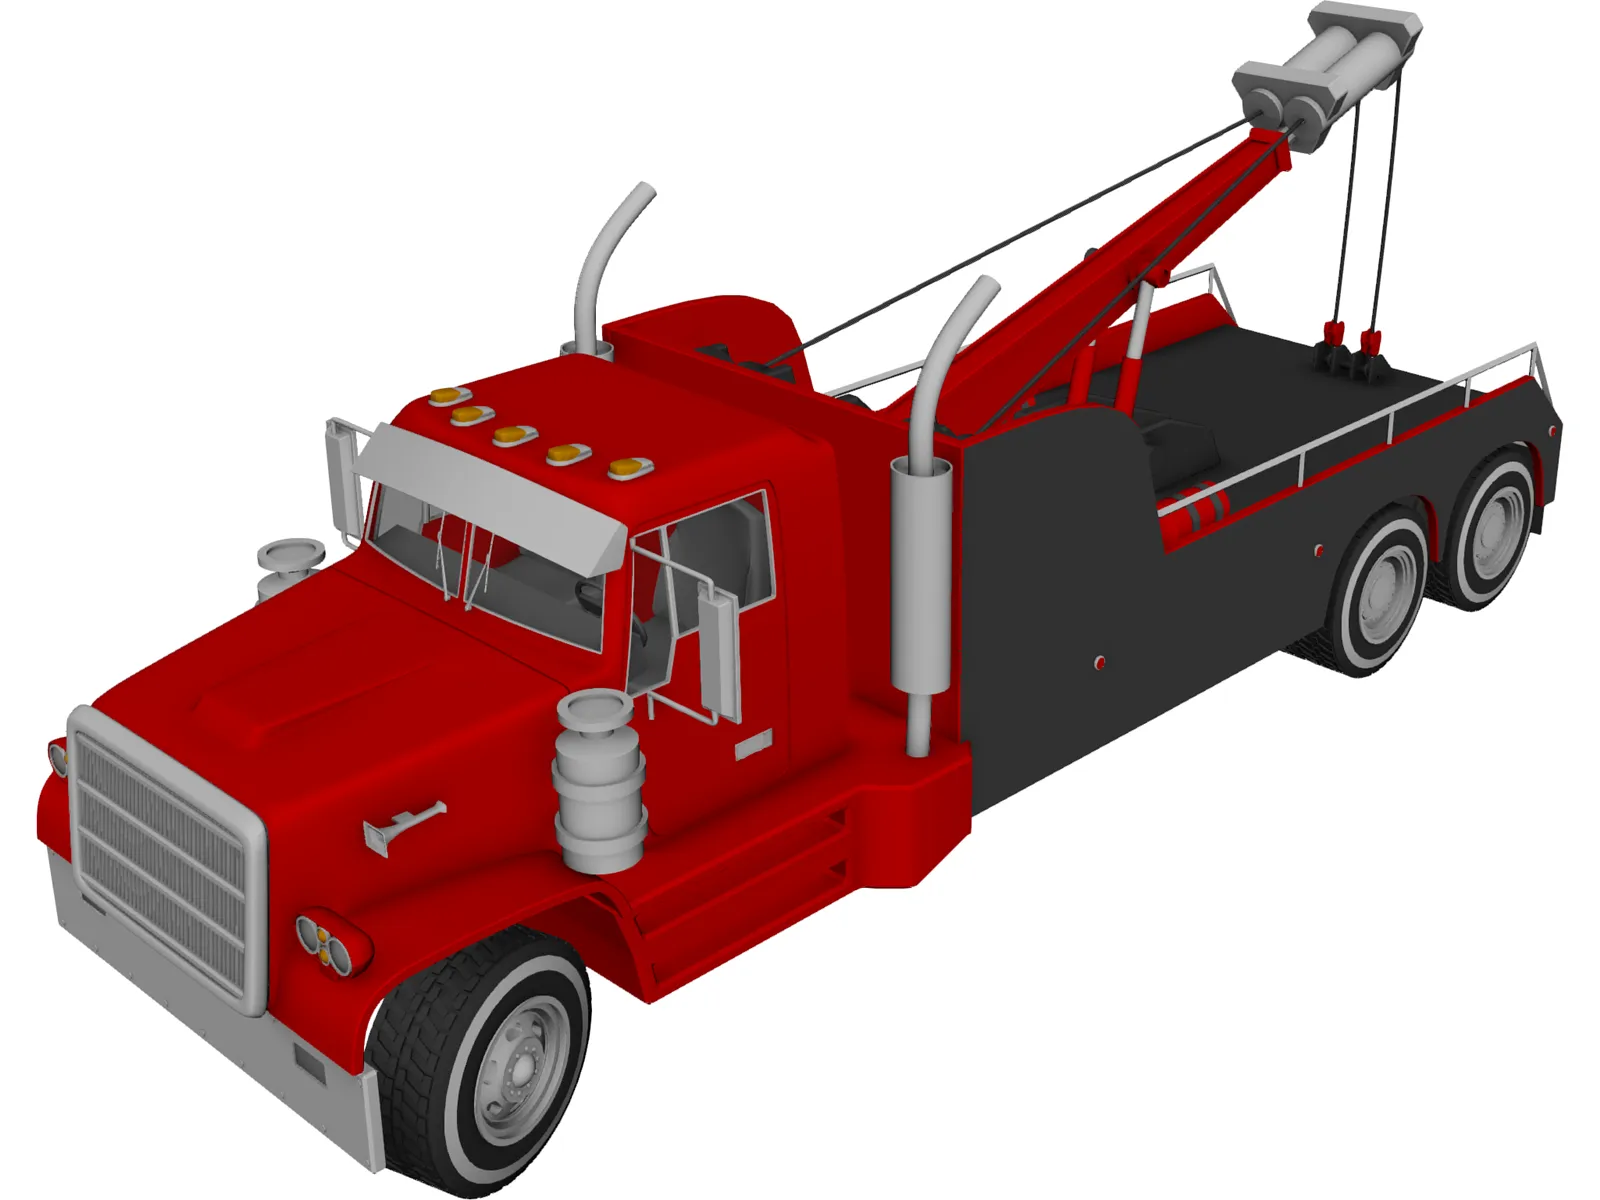 Tow Truck 3D Model